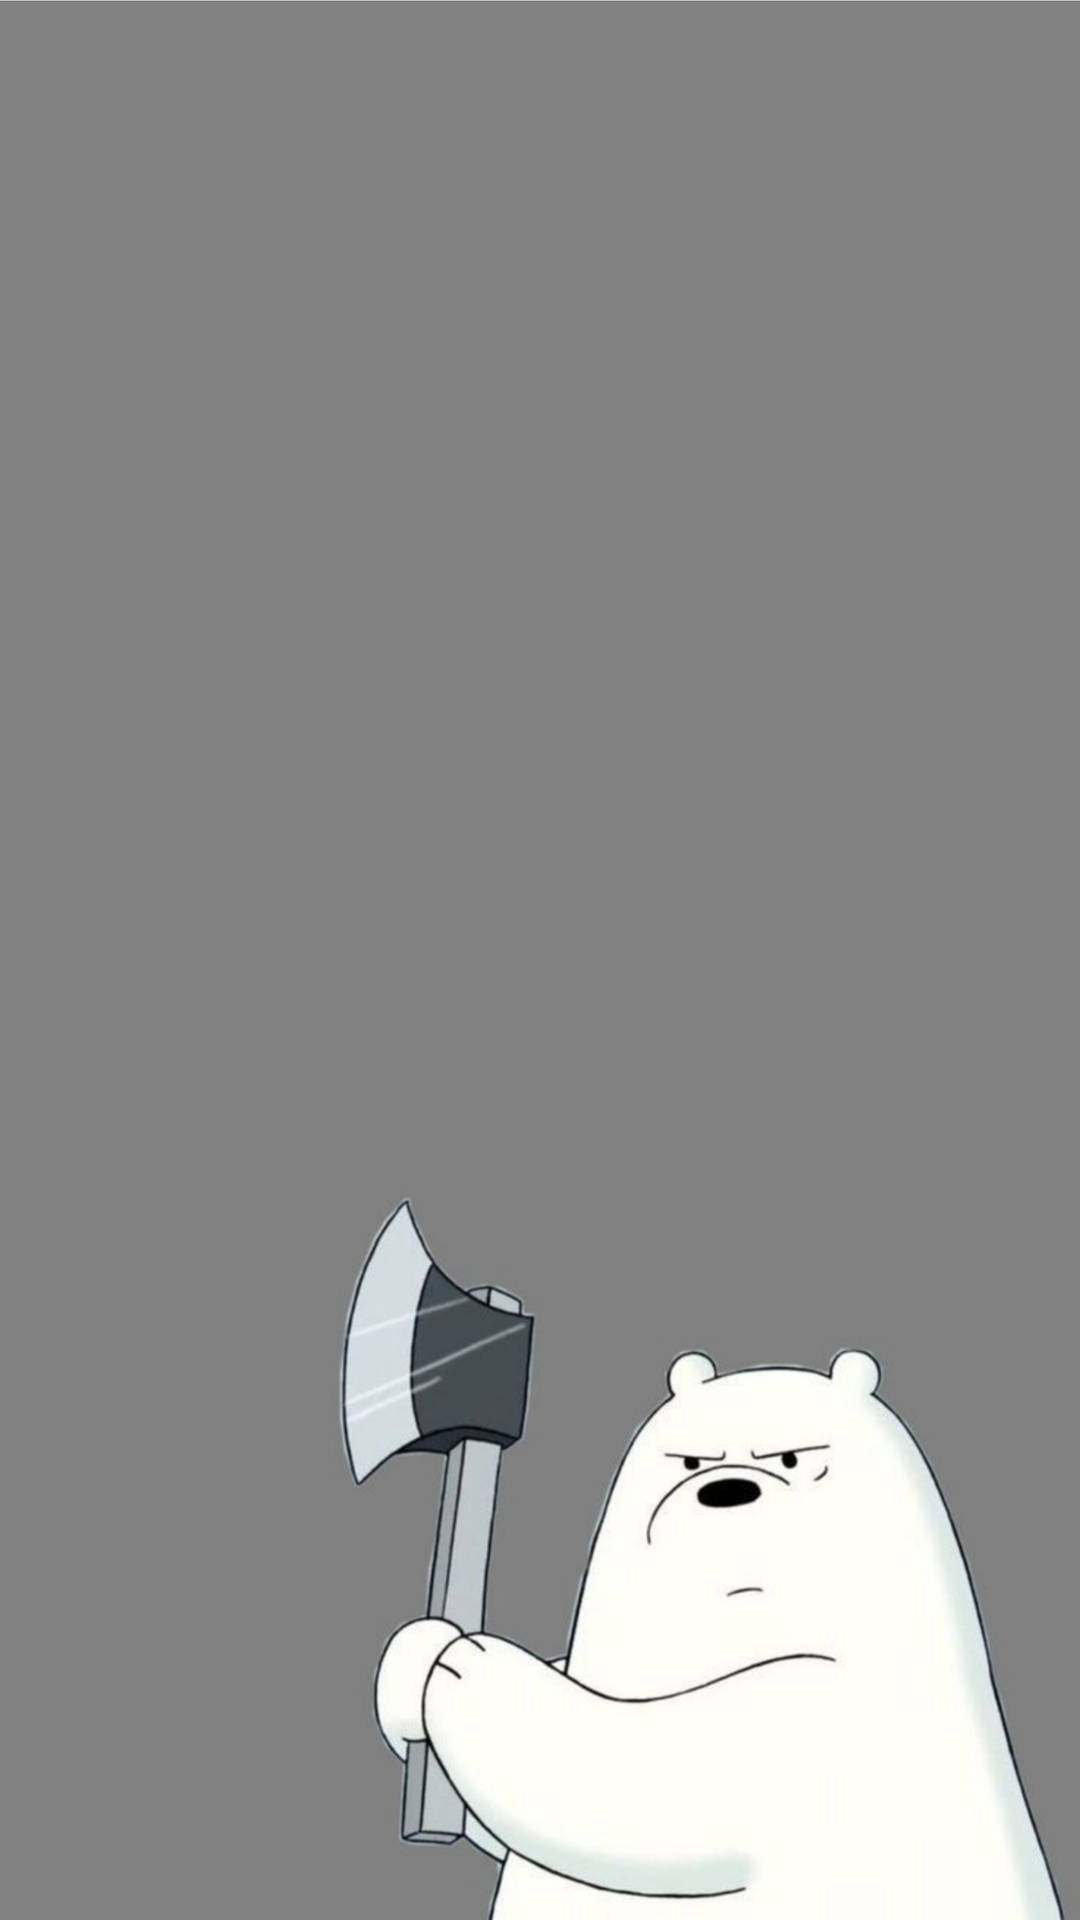 Ice Bear Cartoon Angry Holding His Axe